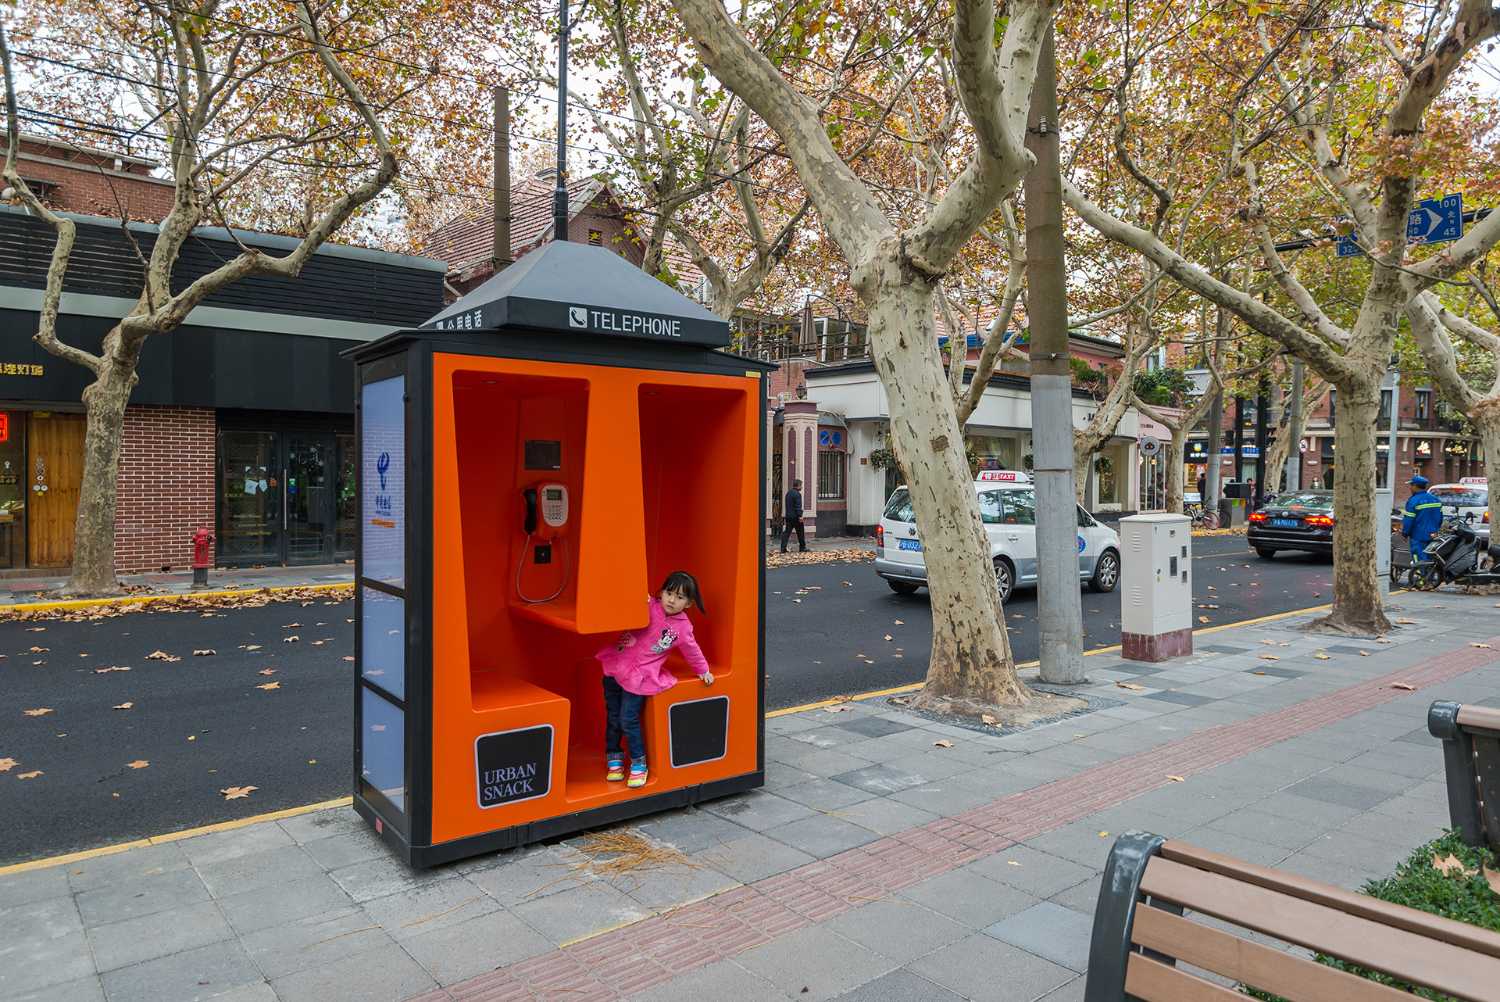 arredo urbano cabina telefonica restyling seduta wifi usb arancione